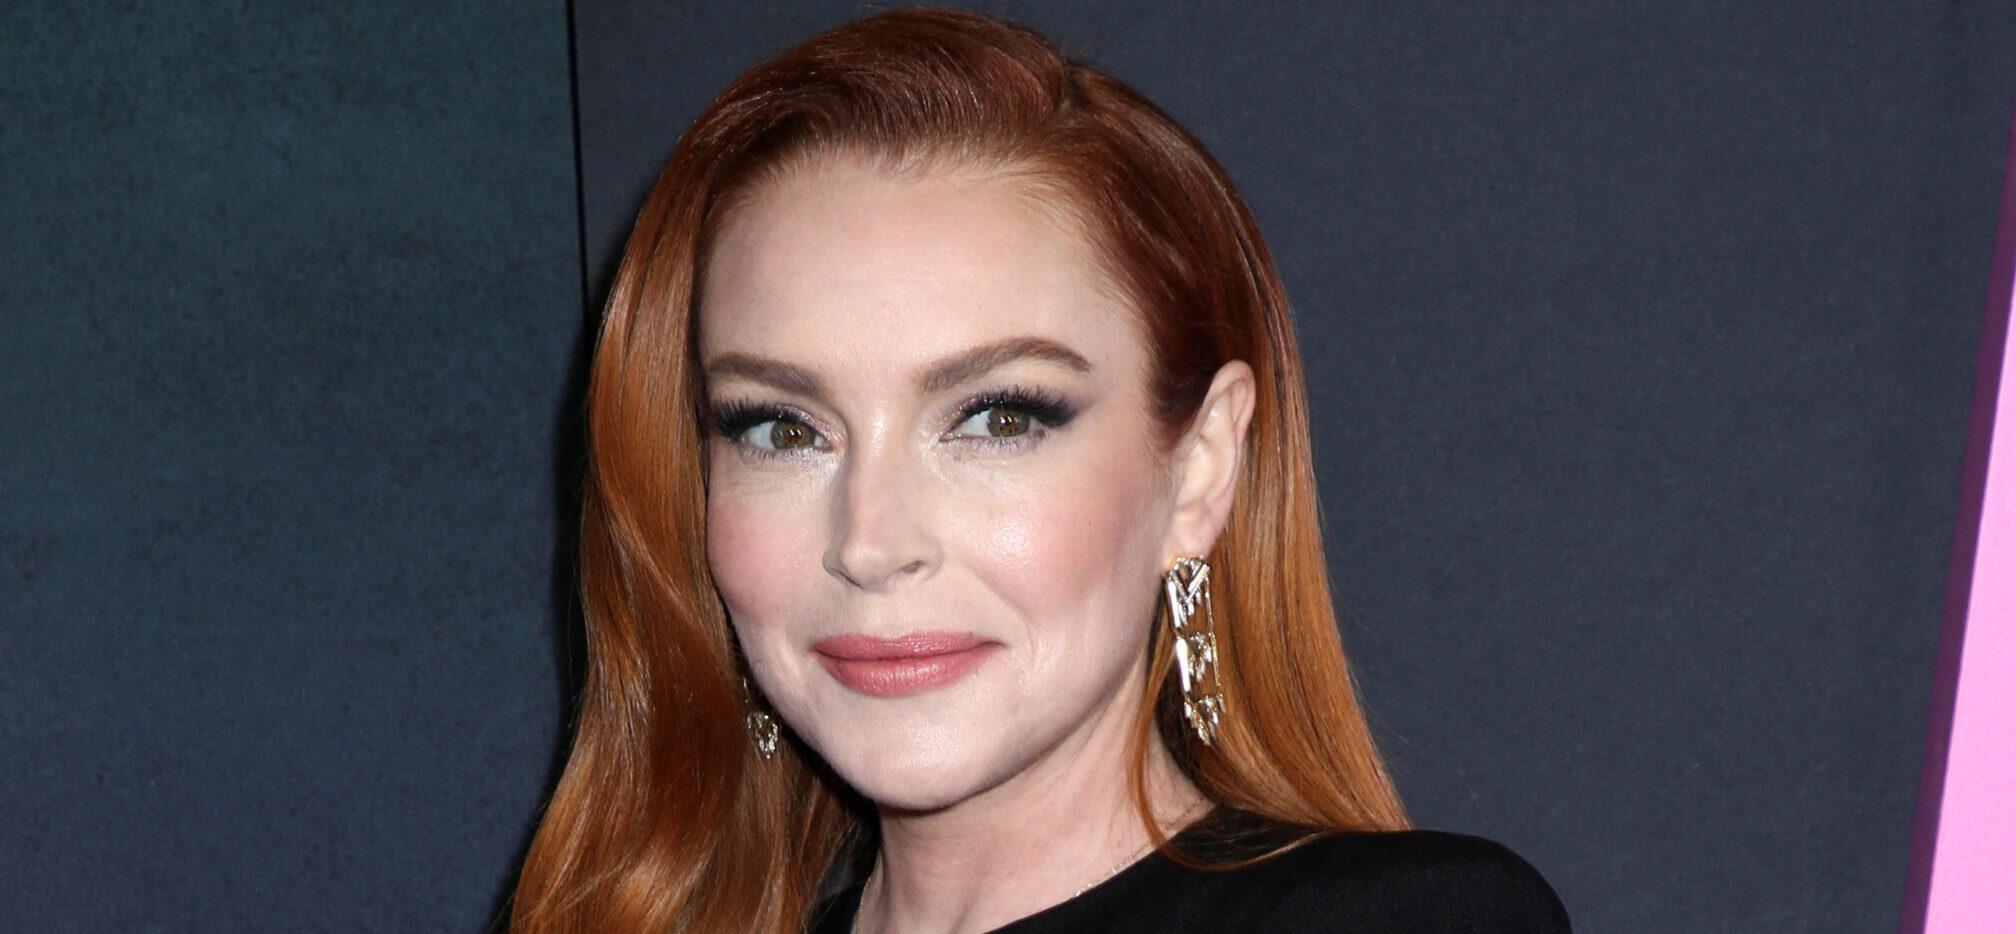 Lindsay Lohan Upset Over 'Mean Girls' Joke Referencing Her Body